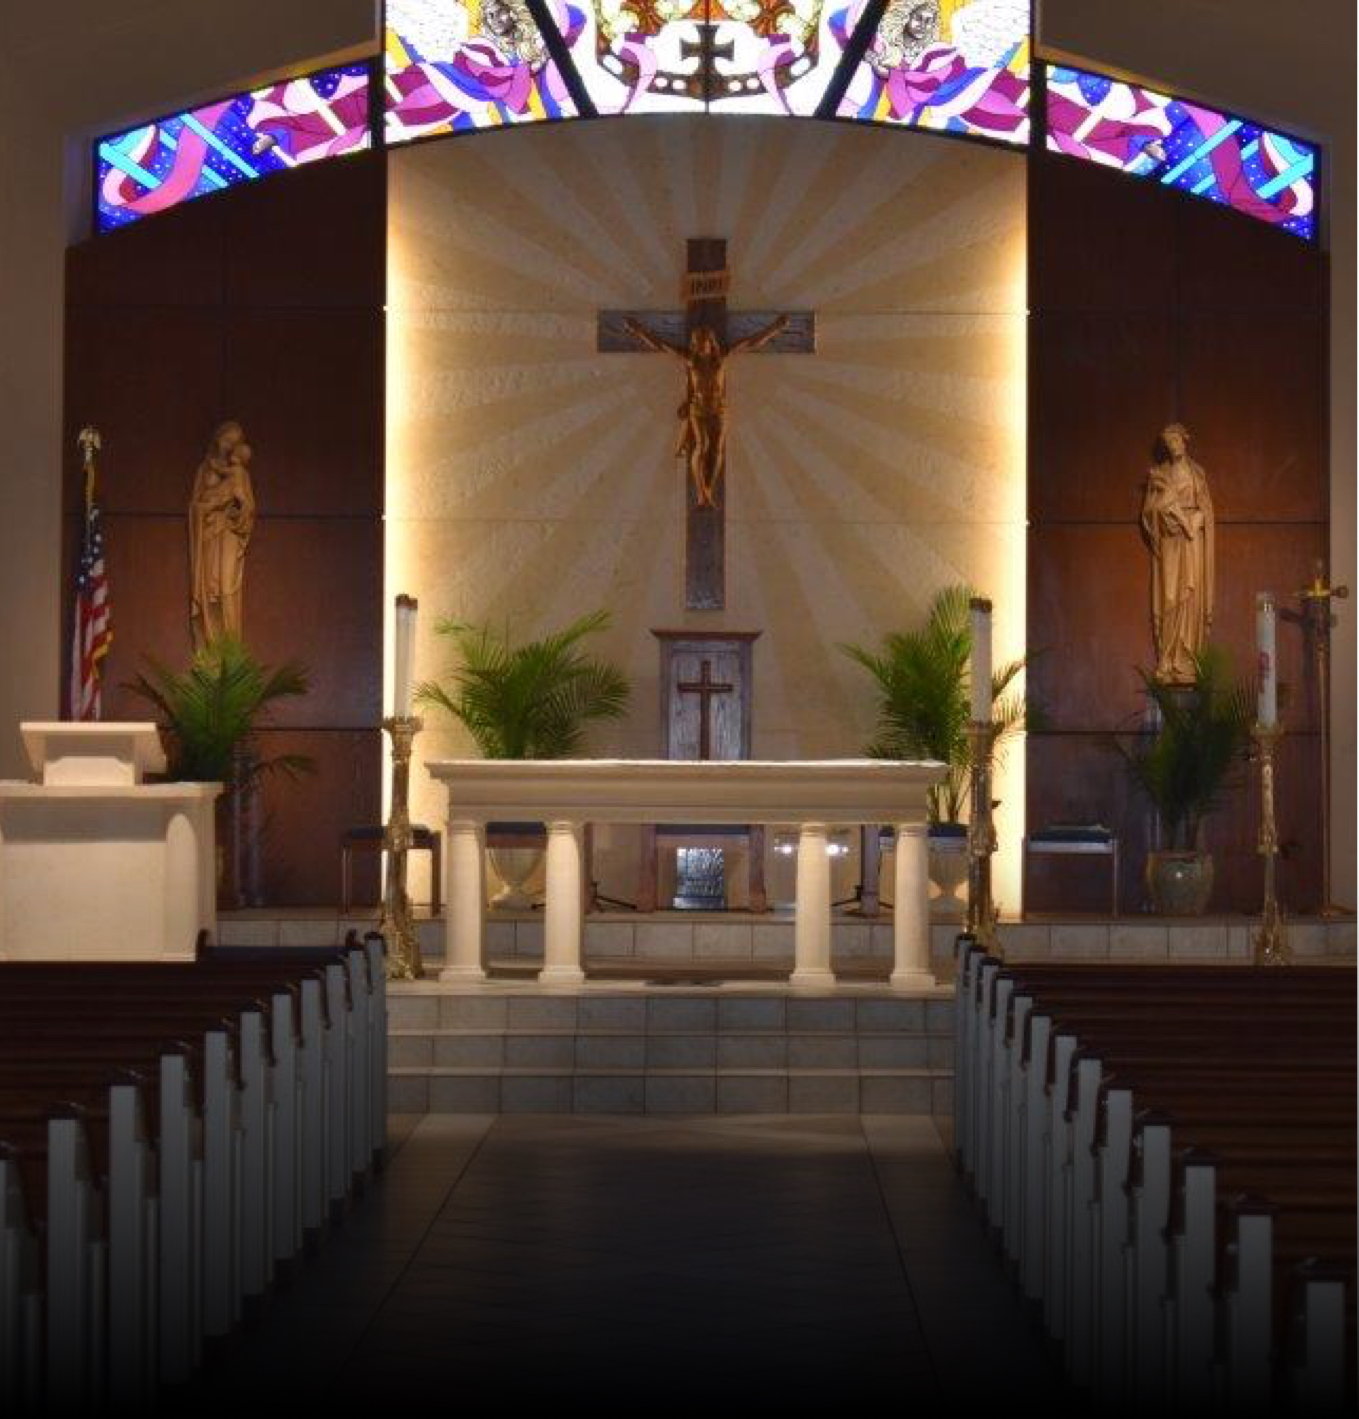 Interior view of new church build altar at St. Stephen's Catholic Church, Midlands, TX